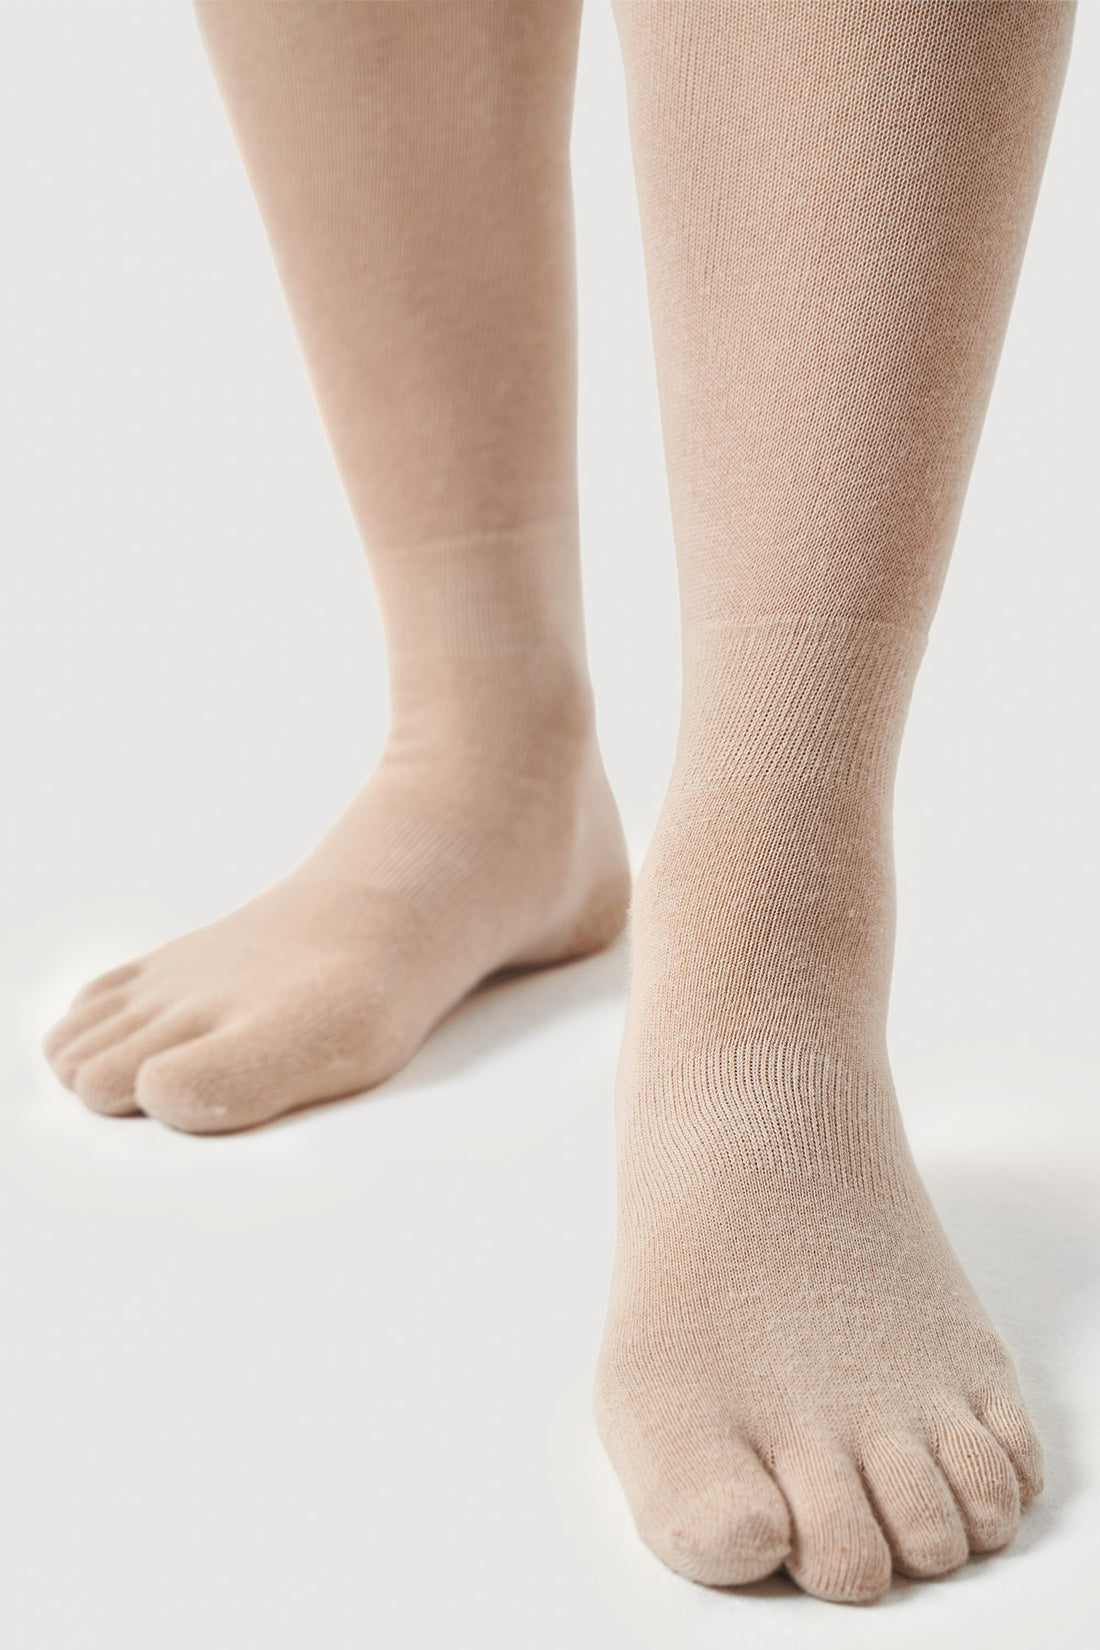 Tip Toes Pilates Barre Yoga Socks